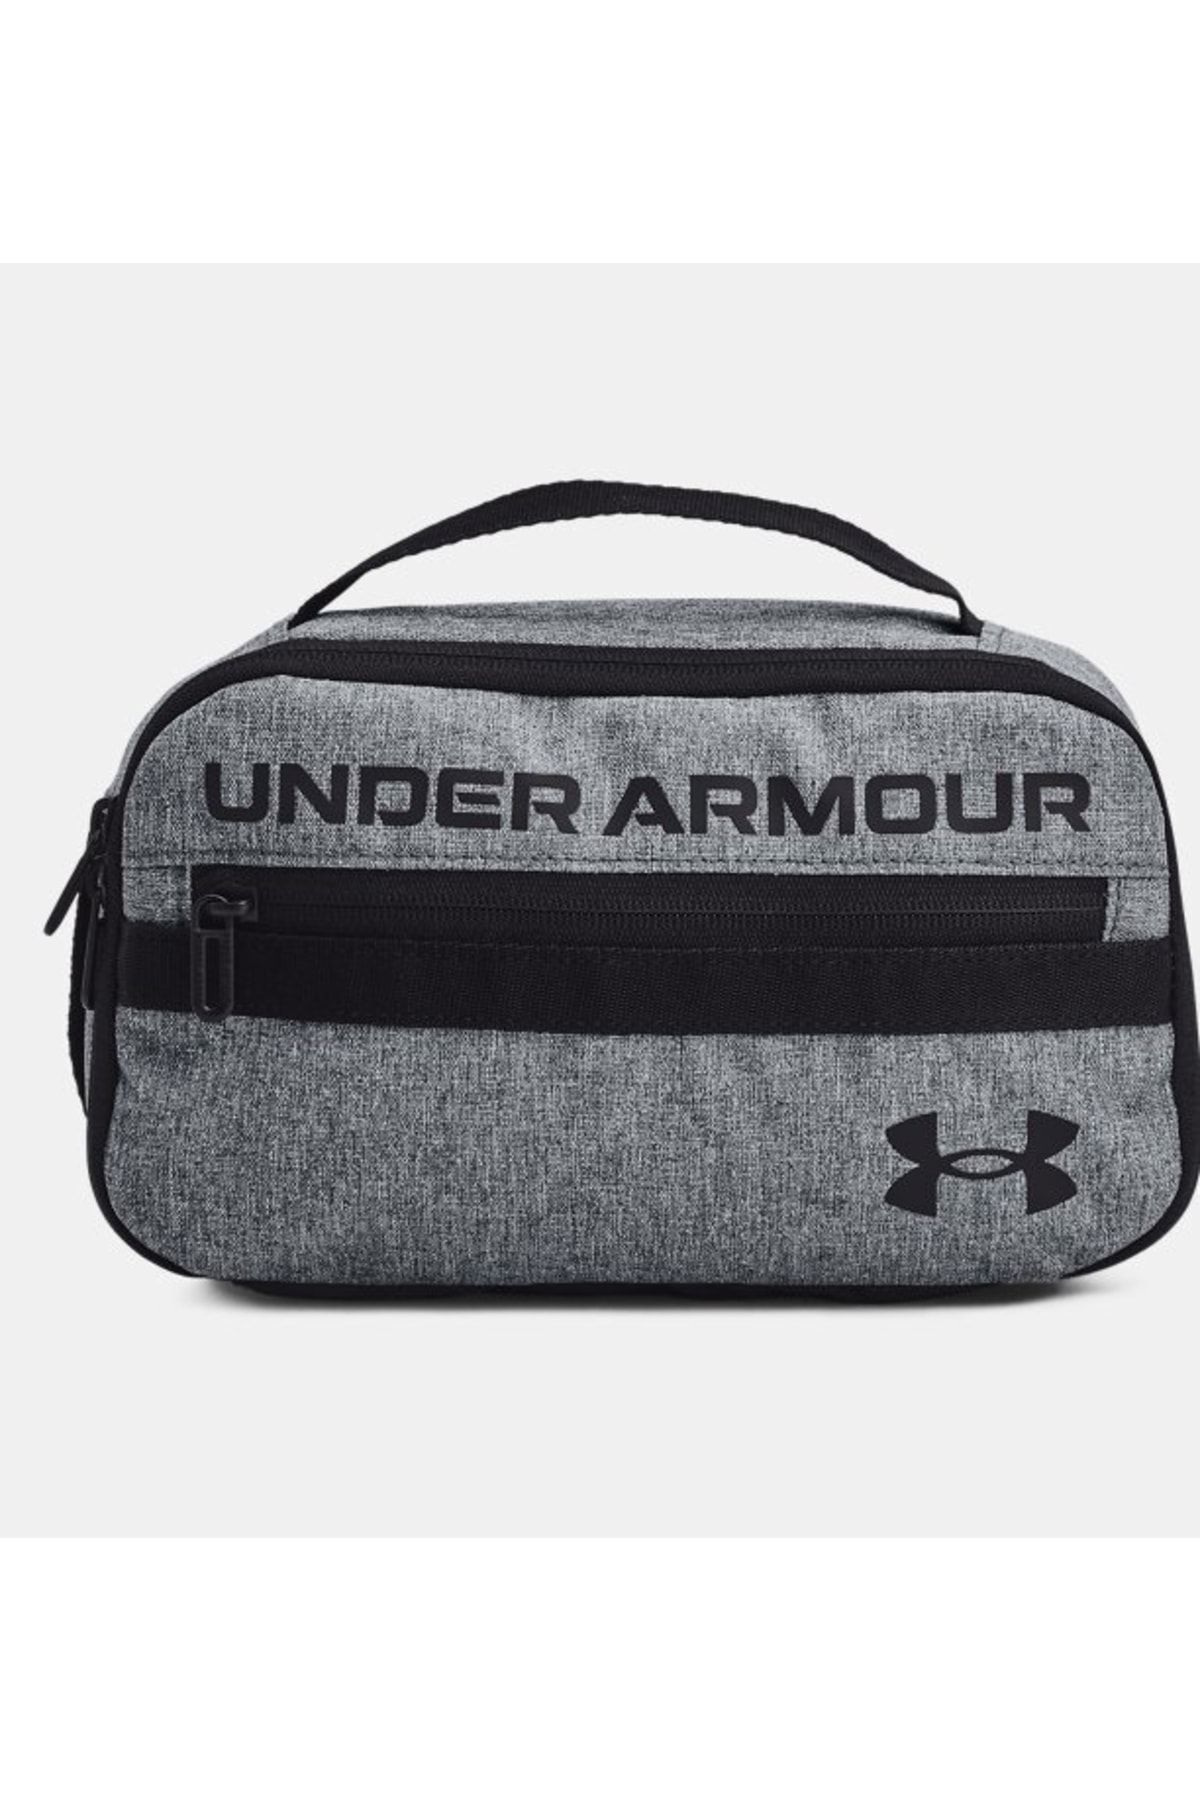 Under Armour UA Contain Travel Kit - 1361993-012